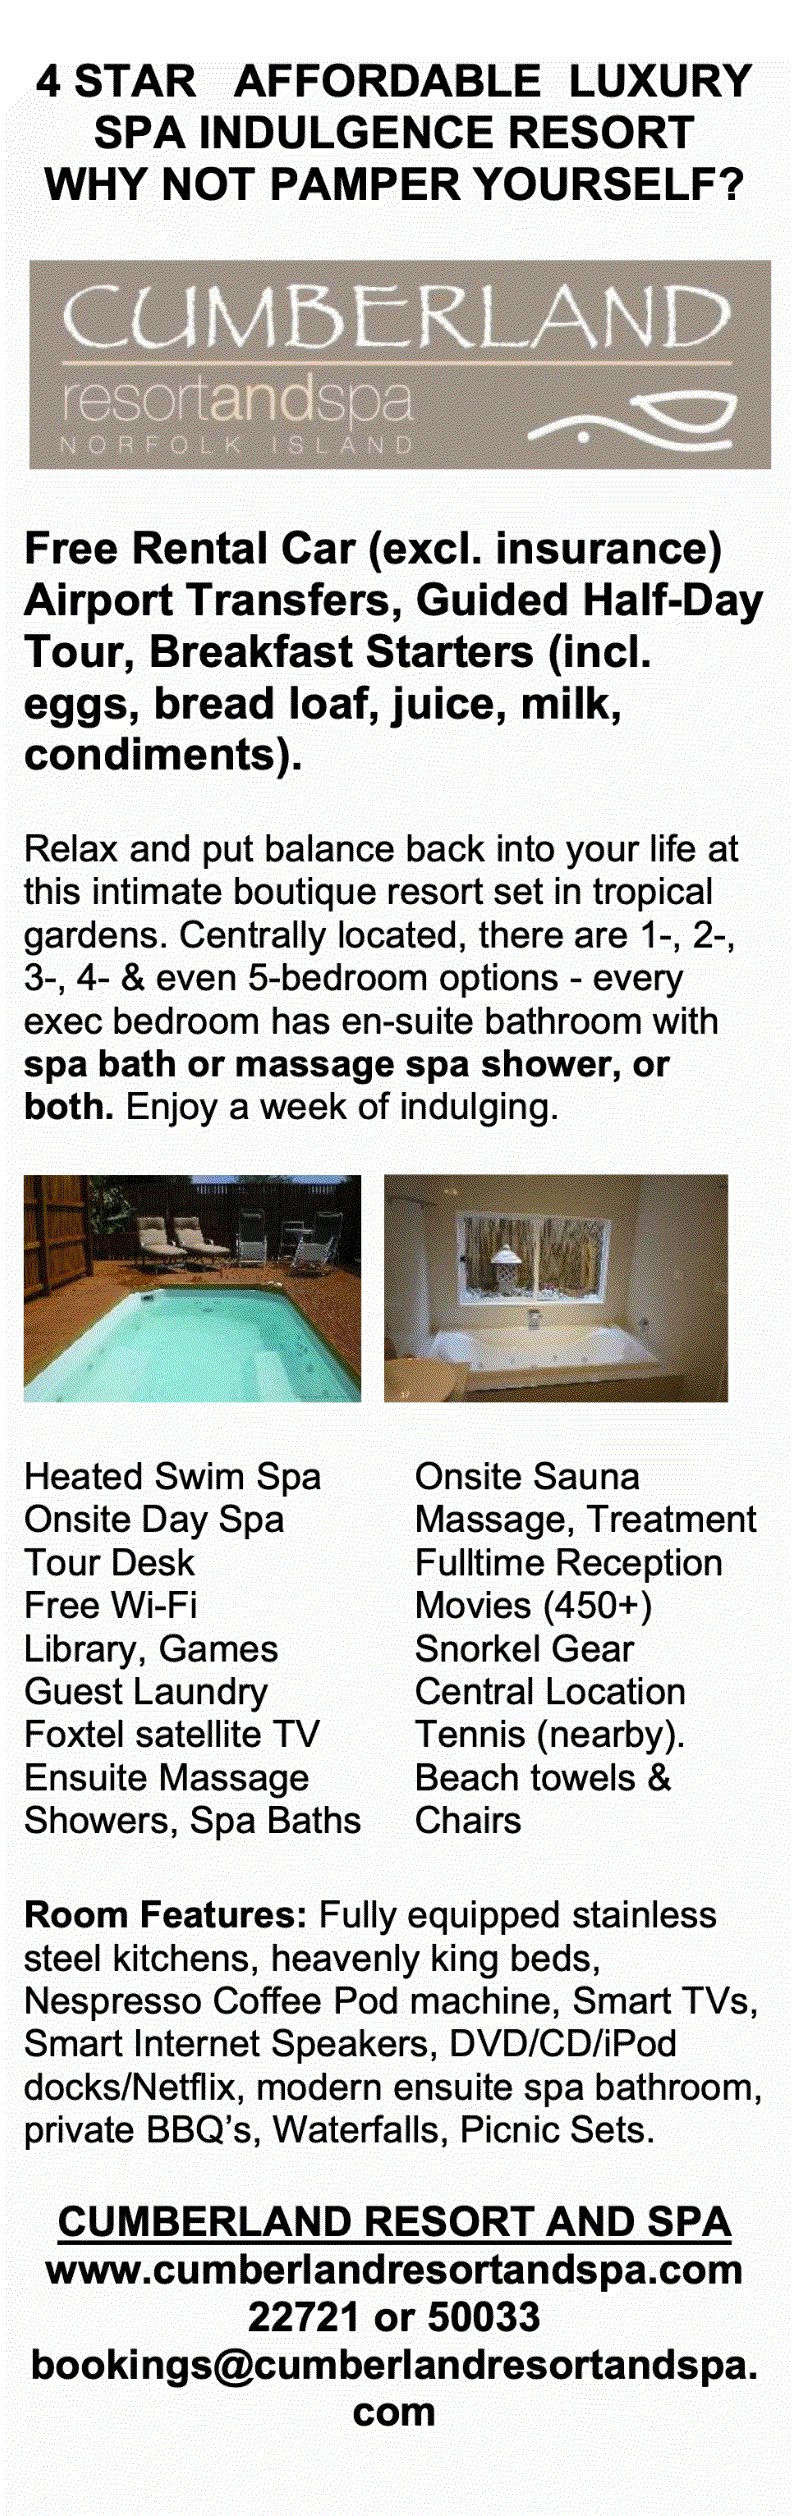 Cumberland Resort & Spa